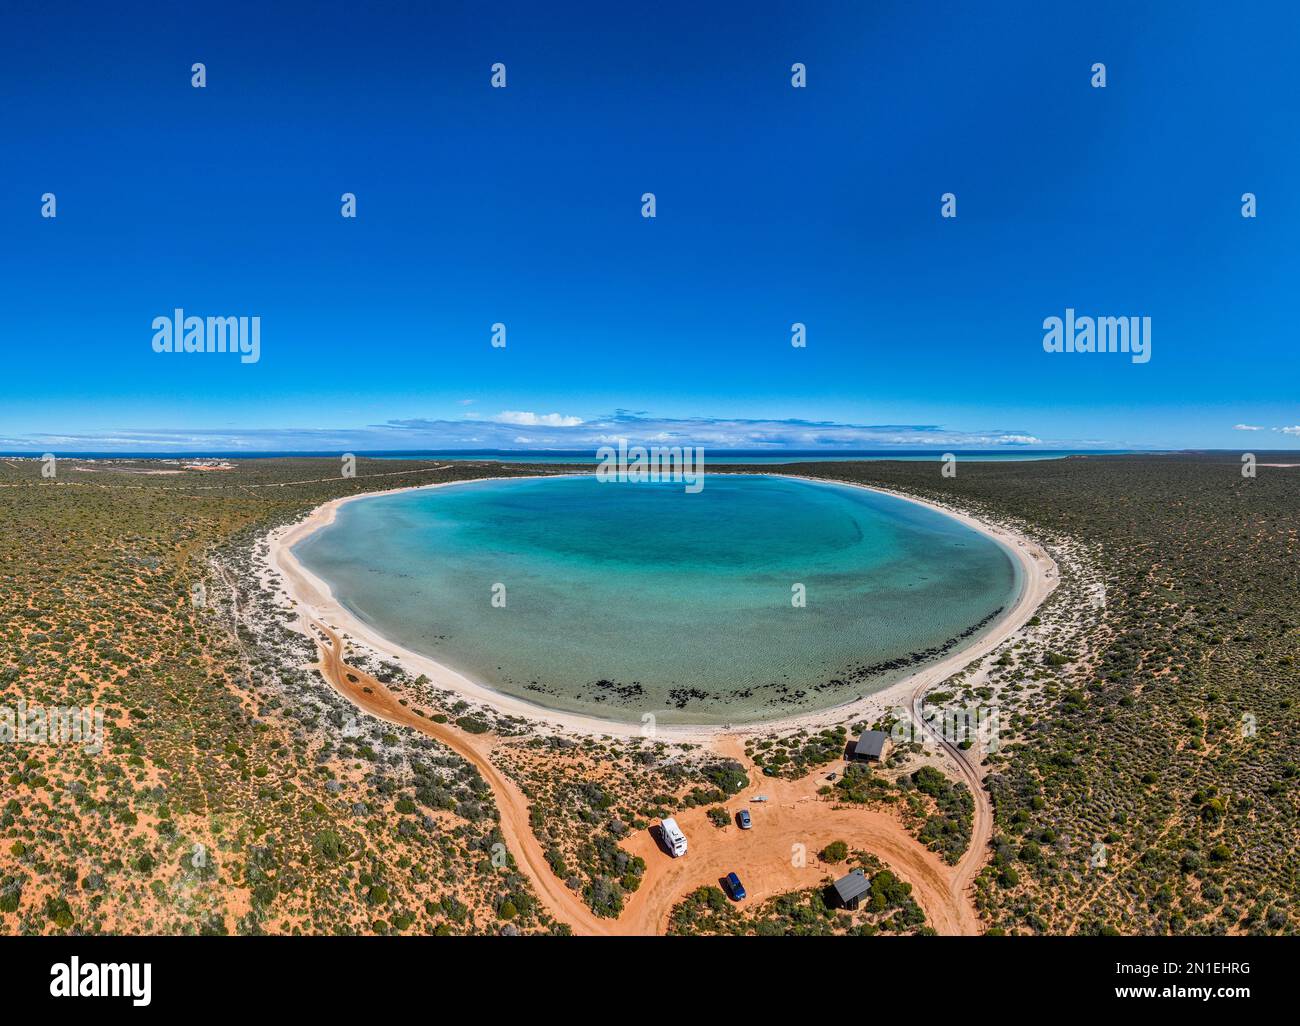 Denham australia hi-res stock photography and images - Alamy